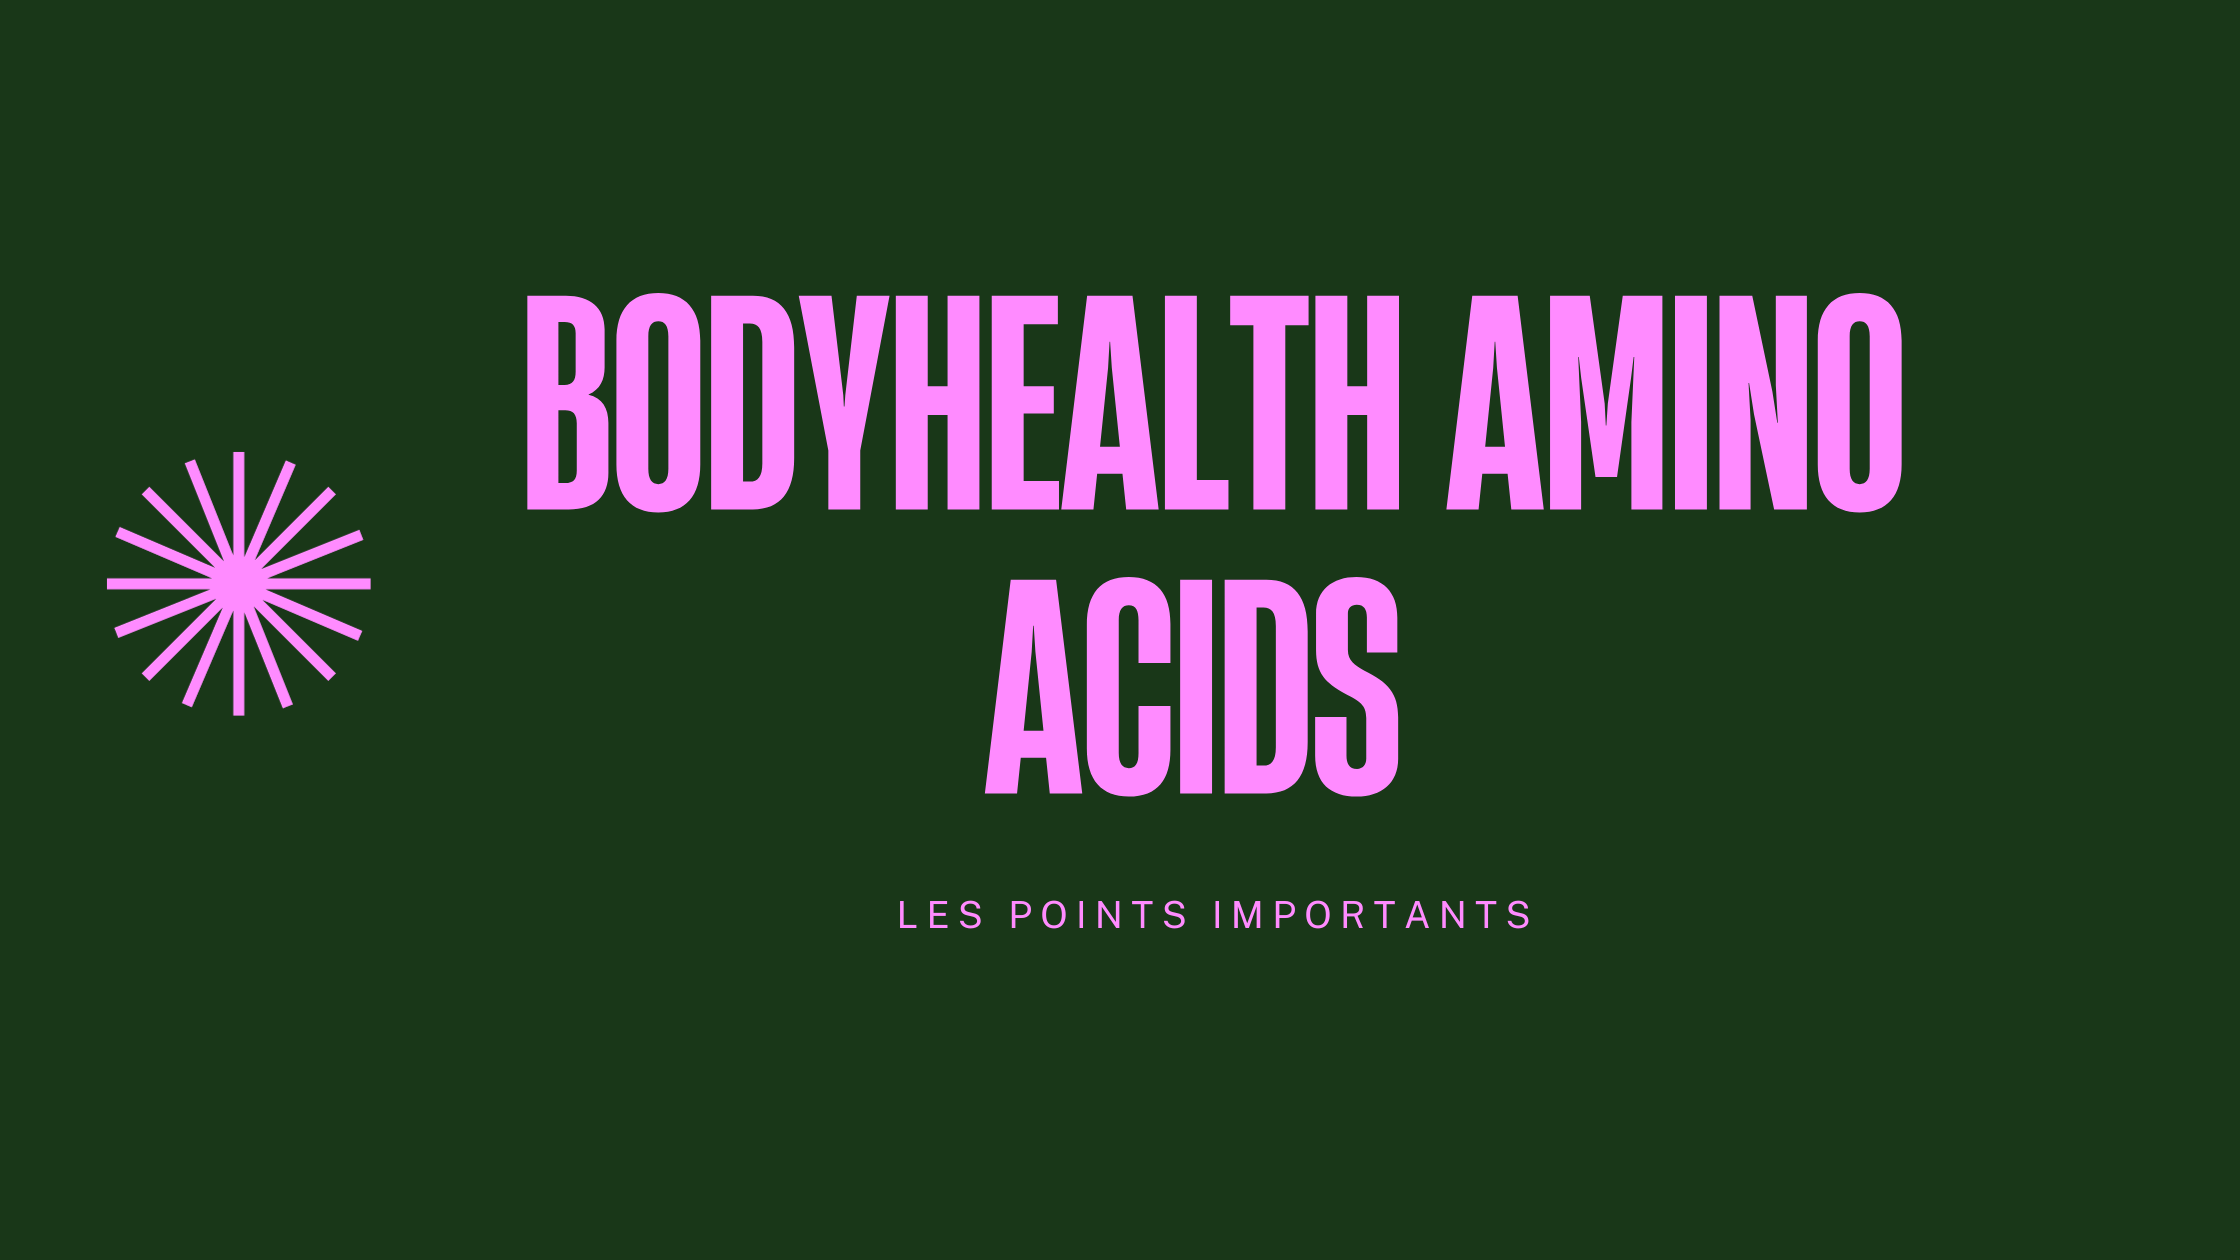 bodyhealth amino acids | Les points importants